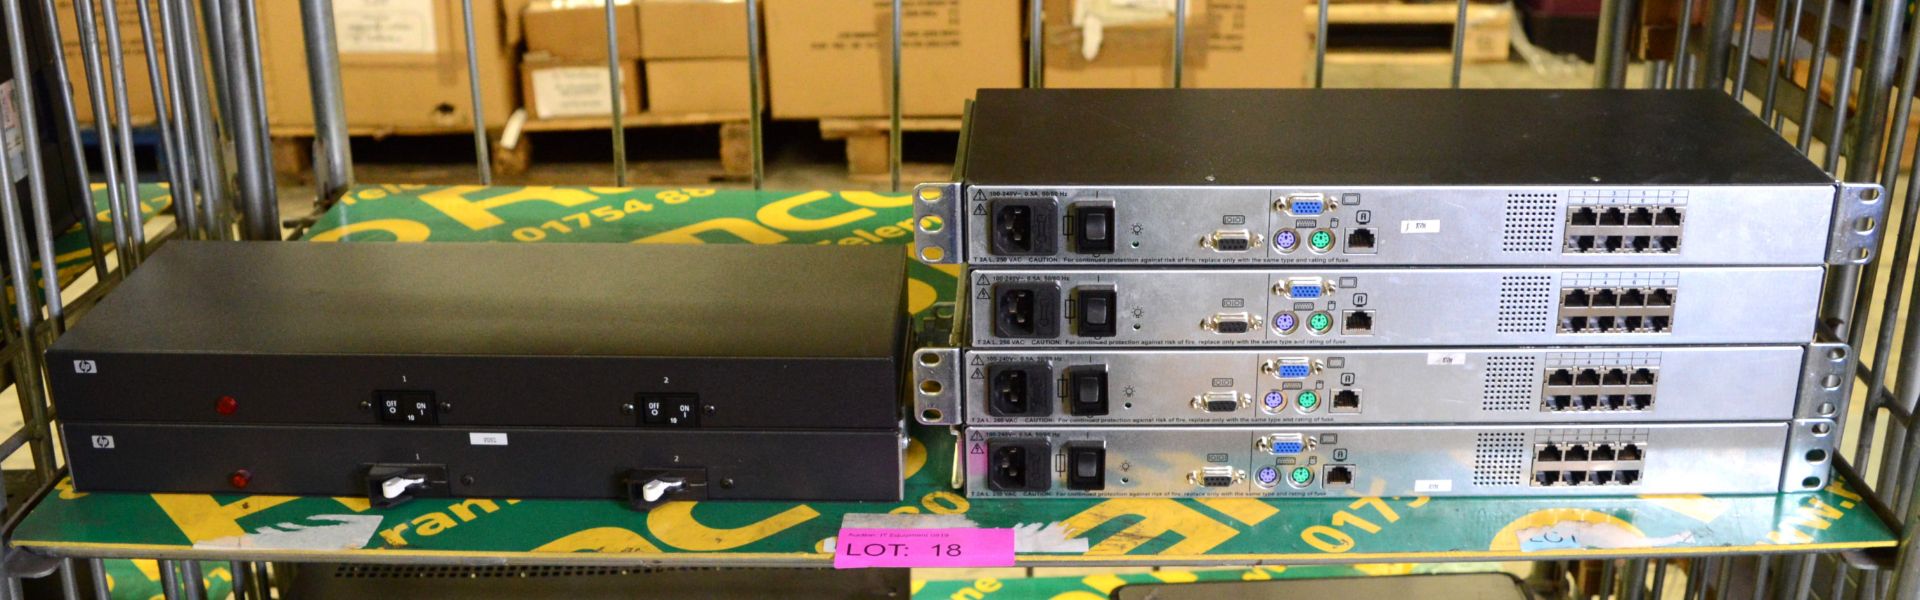 2x HP Modular PDU Control Units, 4x HP KVM Switcher panels - Image 2 of 3